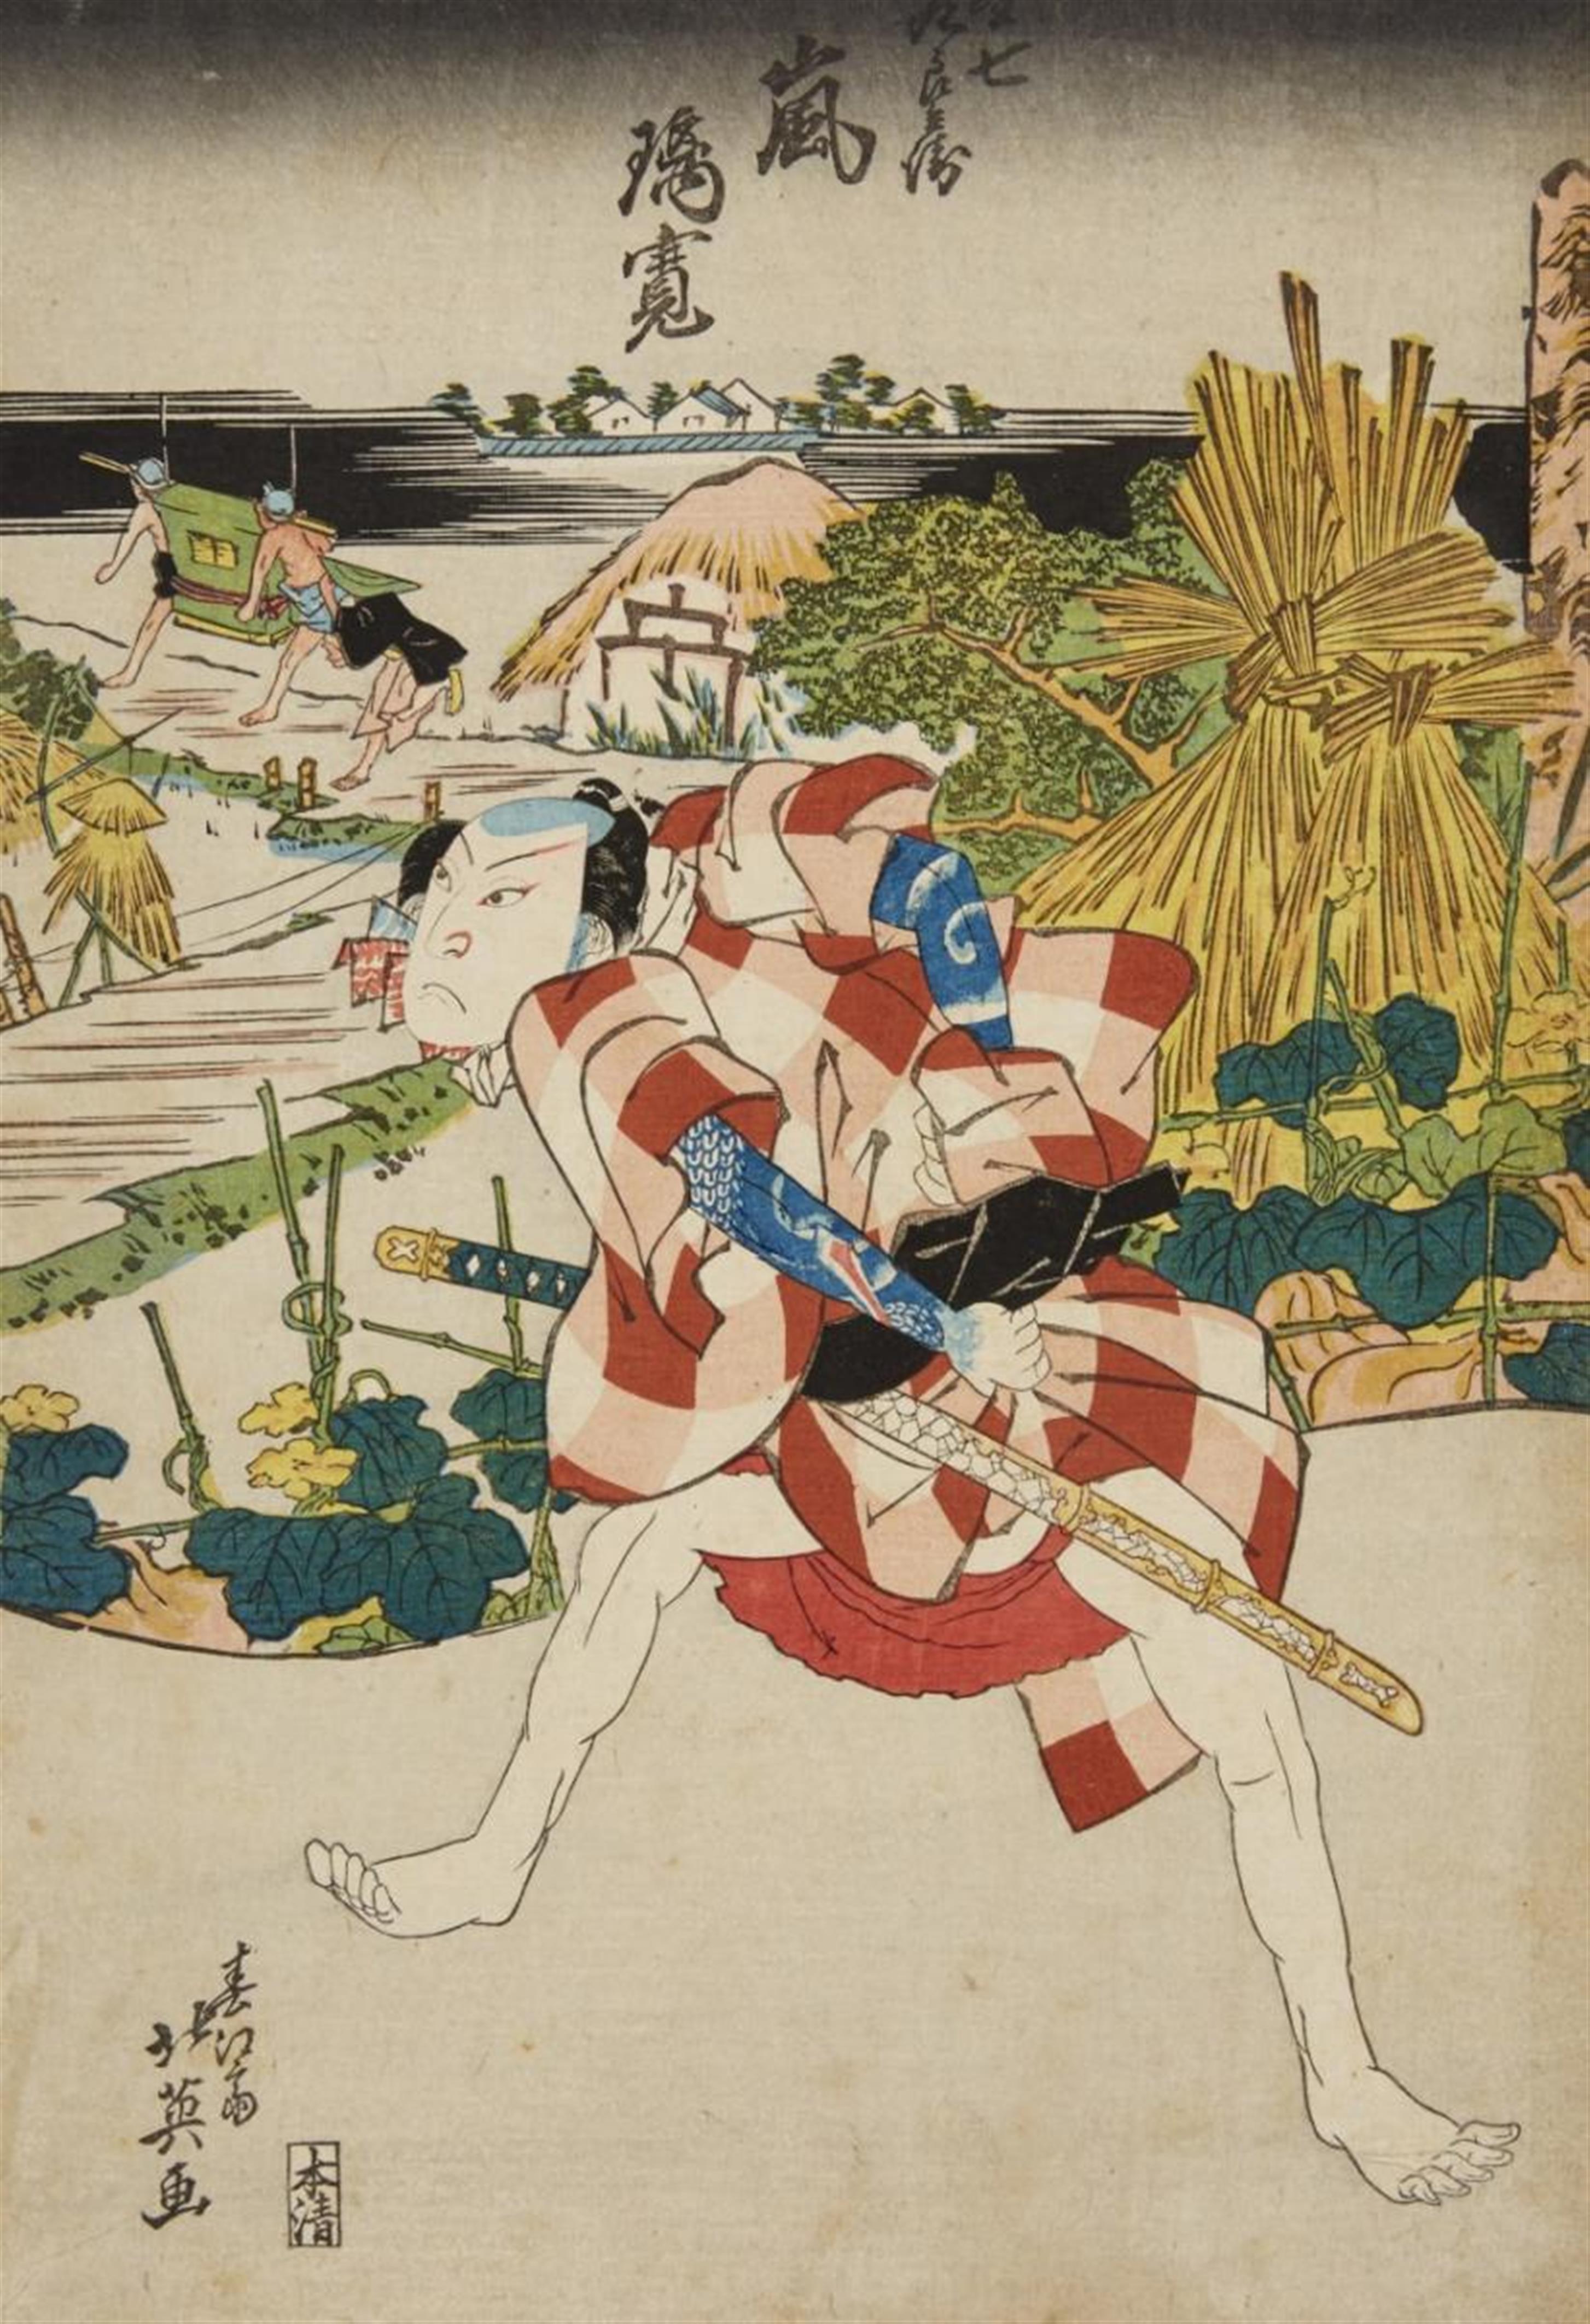 Osaka artists - Osaka artists. 19th century - image-5